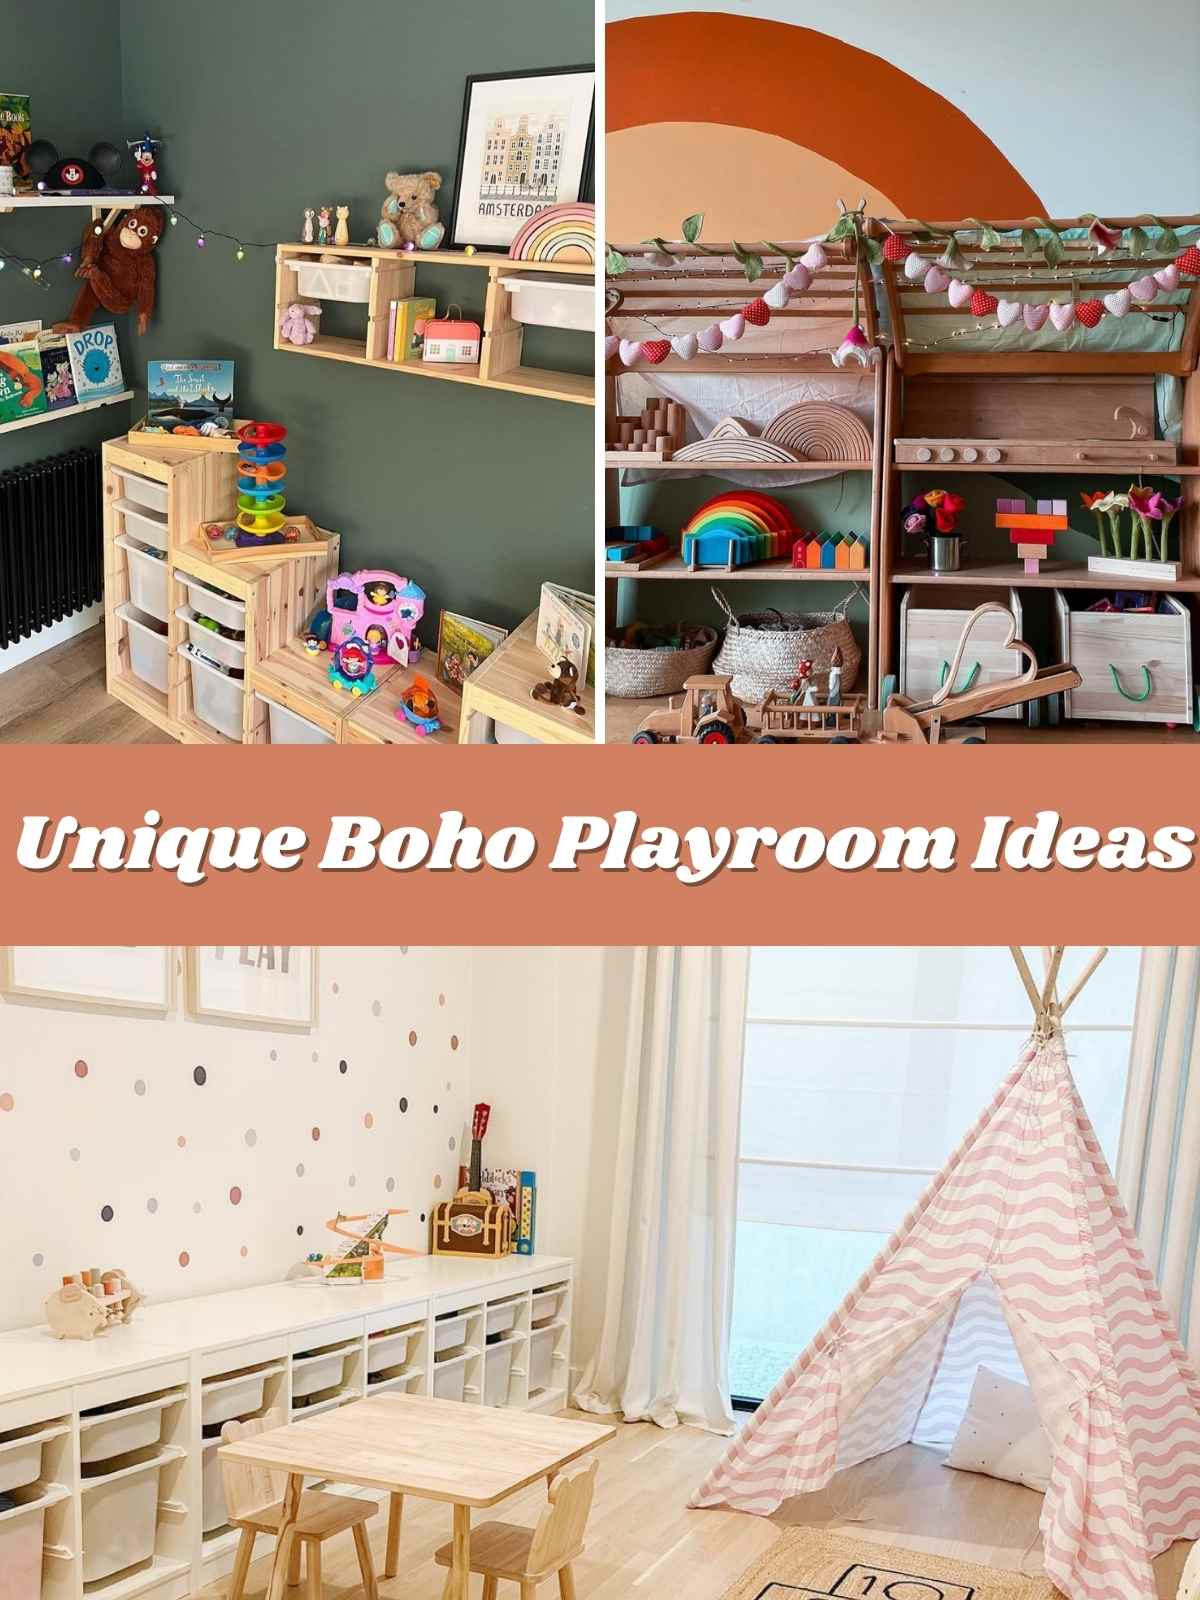 Unique Boho Playroom Ideas. 3 different playroom examples. 